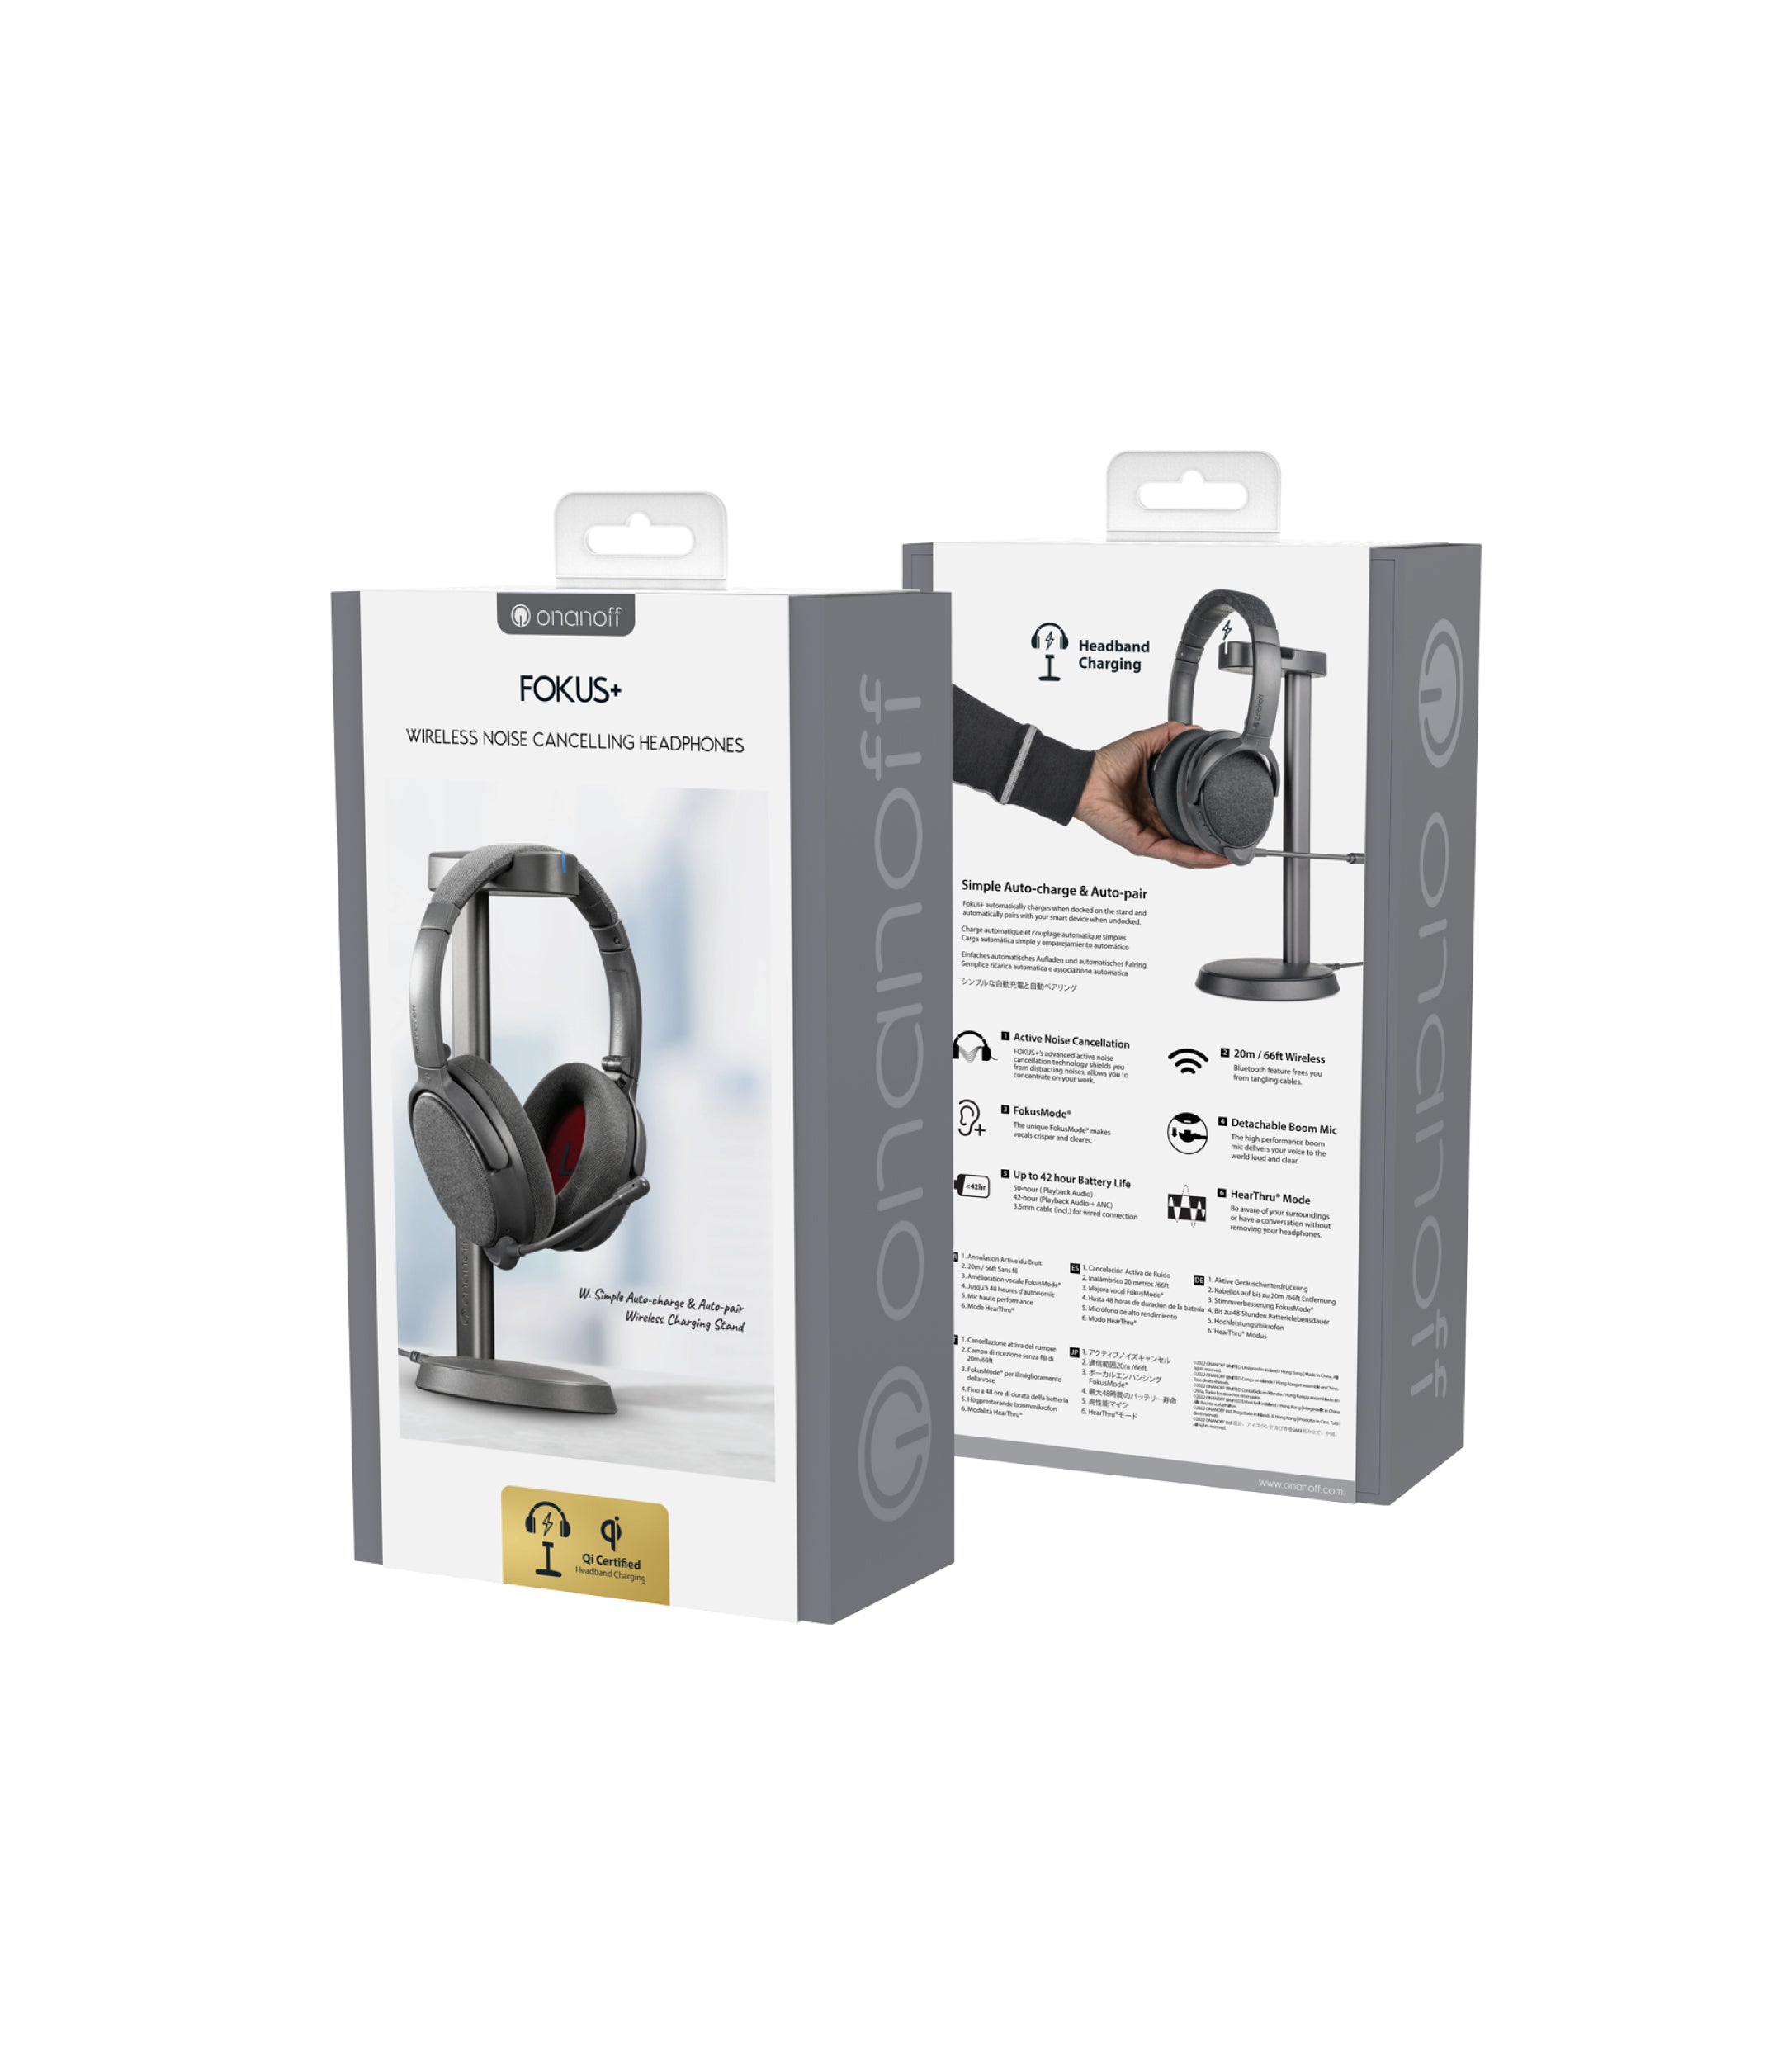 Fokus+ ANC Bluetooth Headphones with Wireless Charging Stand – onanoff